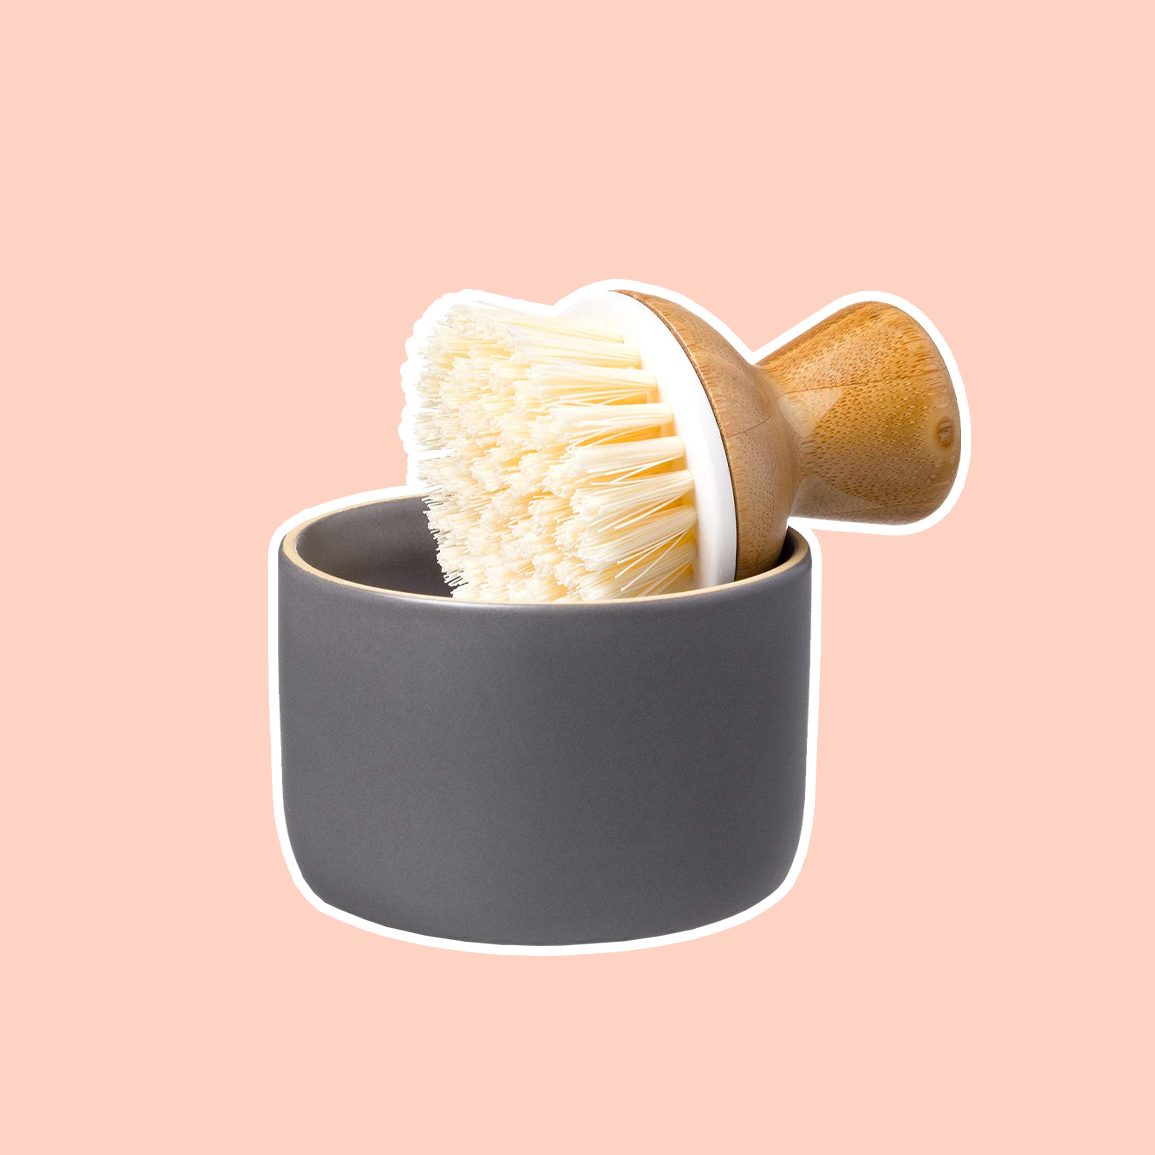 https://www.tasteofhome.com/wp-content/uploads/2019/02/Full-Circle-Ceramic-Soap-Dispenser-and-Bamboo-Dish-2.jpg?fit=700%2C700